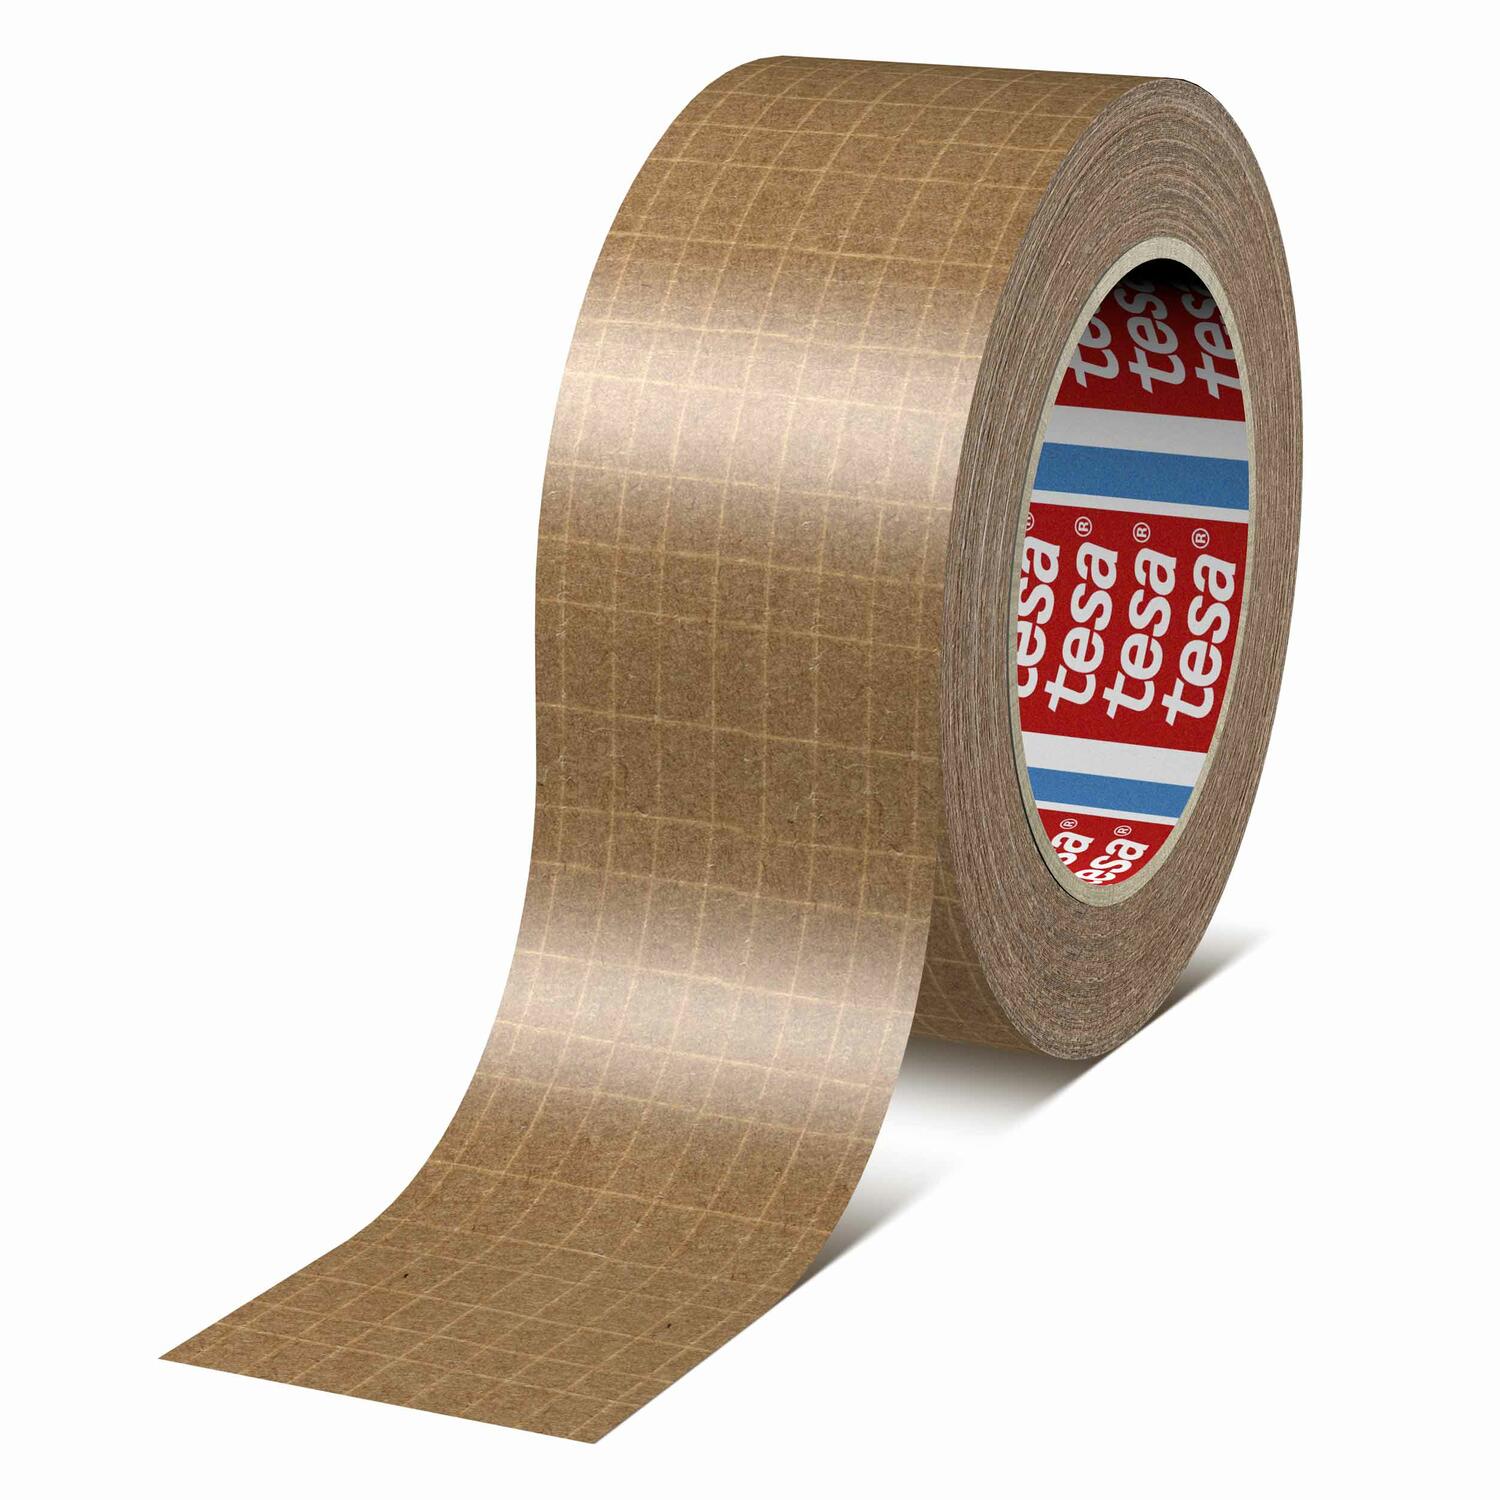 TESA Papierklebeband 60013 glasfaserverstärkt hohe Klebekraft 50mm x 25m, braun